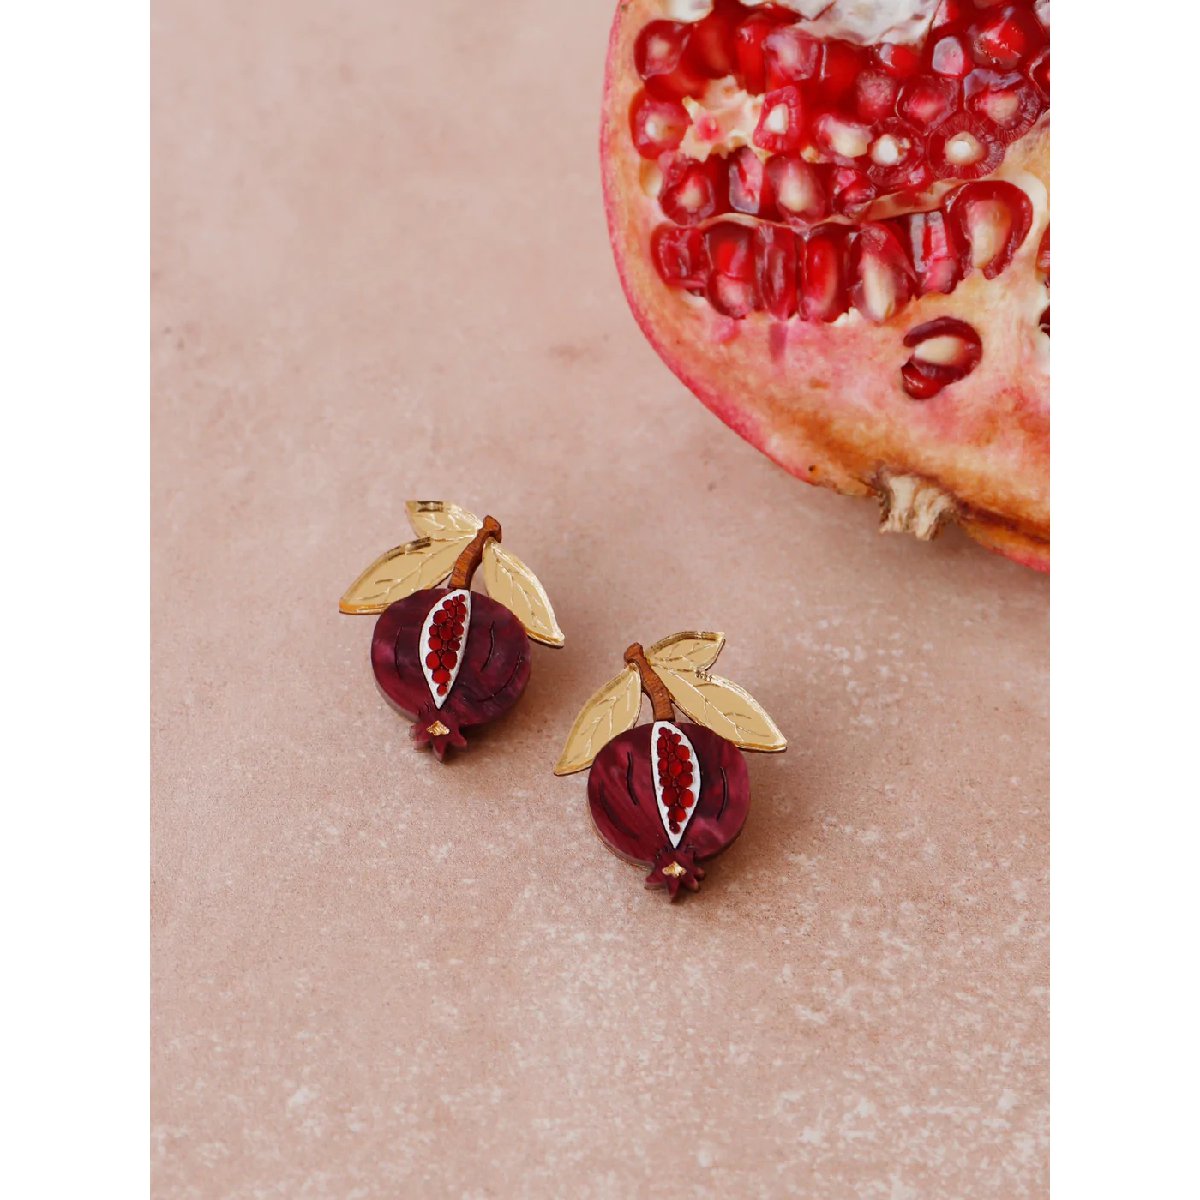 mondocherry | Wolf & Moon | mini pomegranate stud earrings